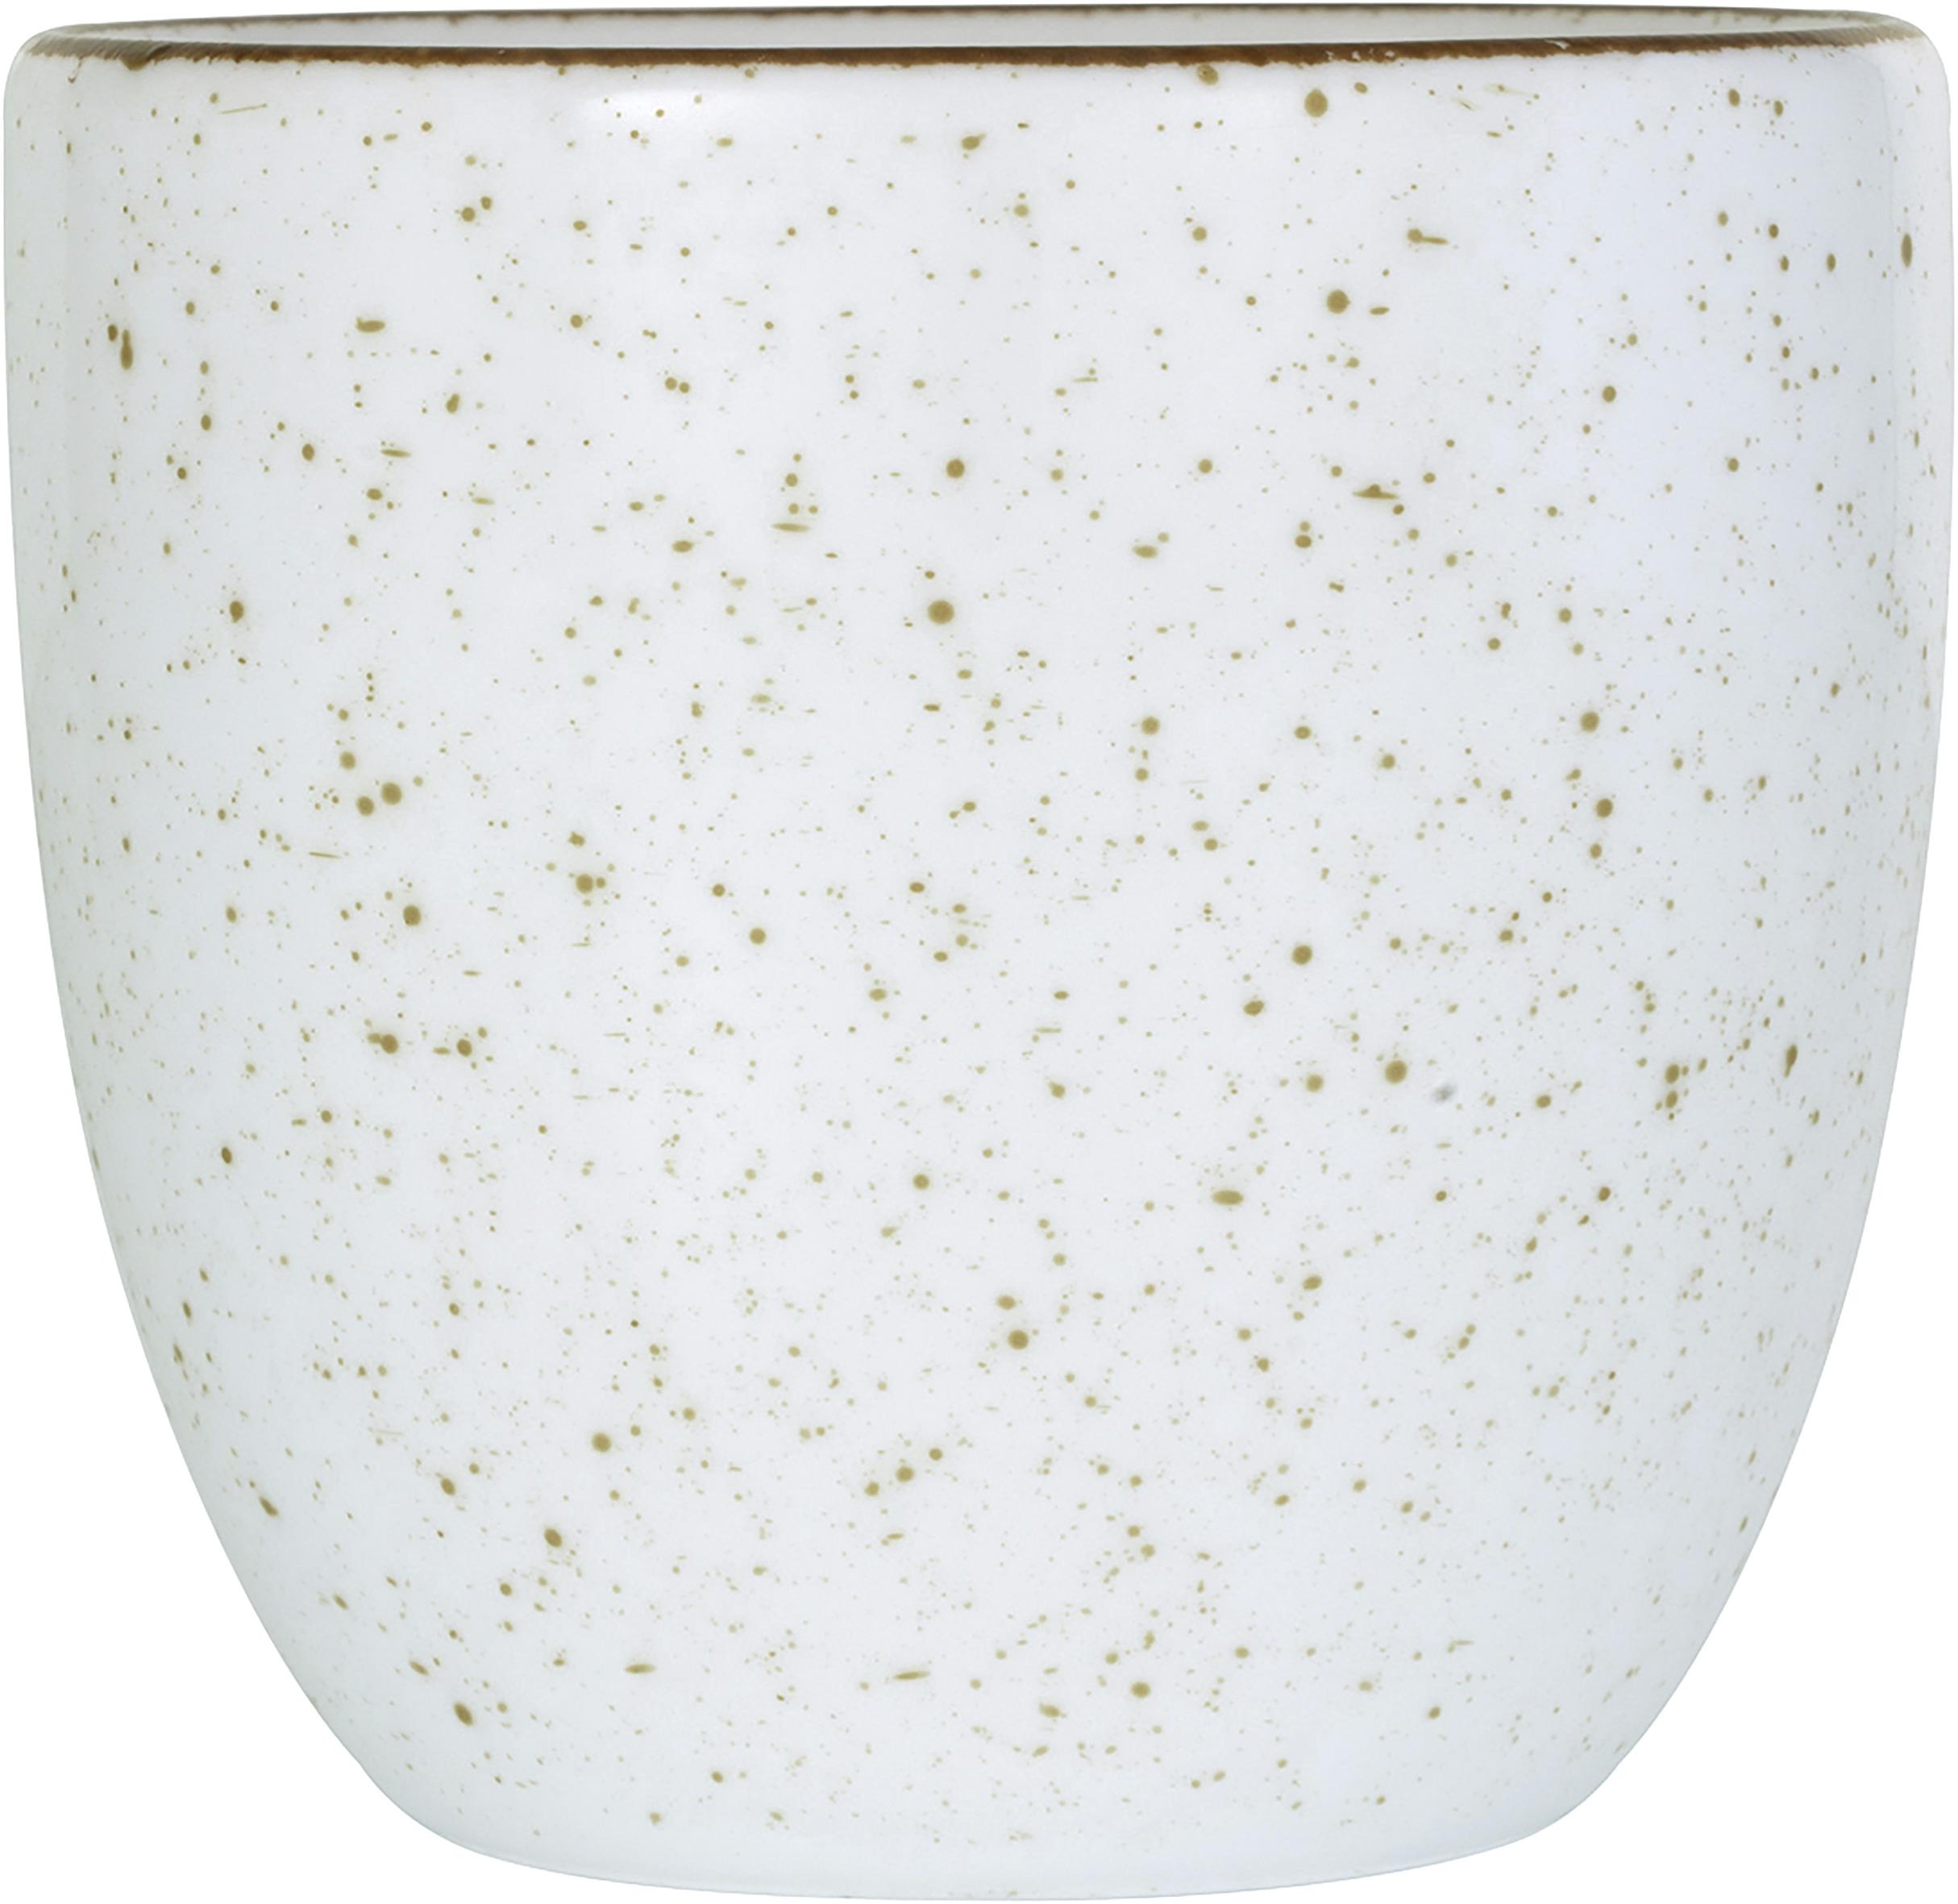 Kaffeebecher Capri aus Porzellan ca. 300ml - Weiß, MODERN, Keramik (9/9/8,5cm) - Premium Living